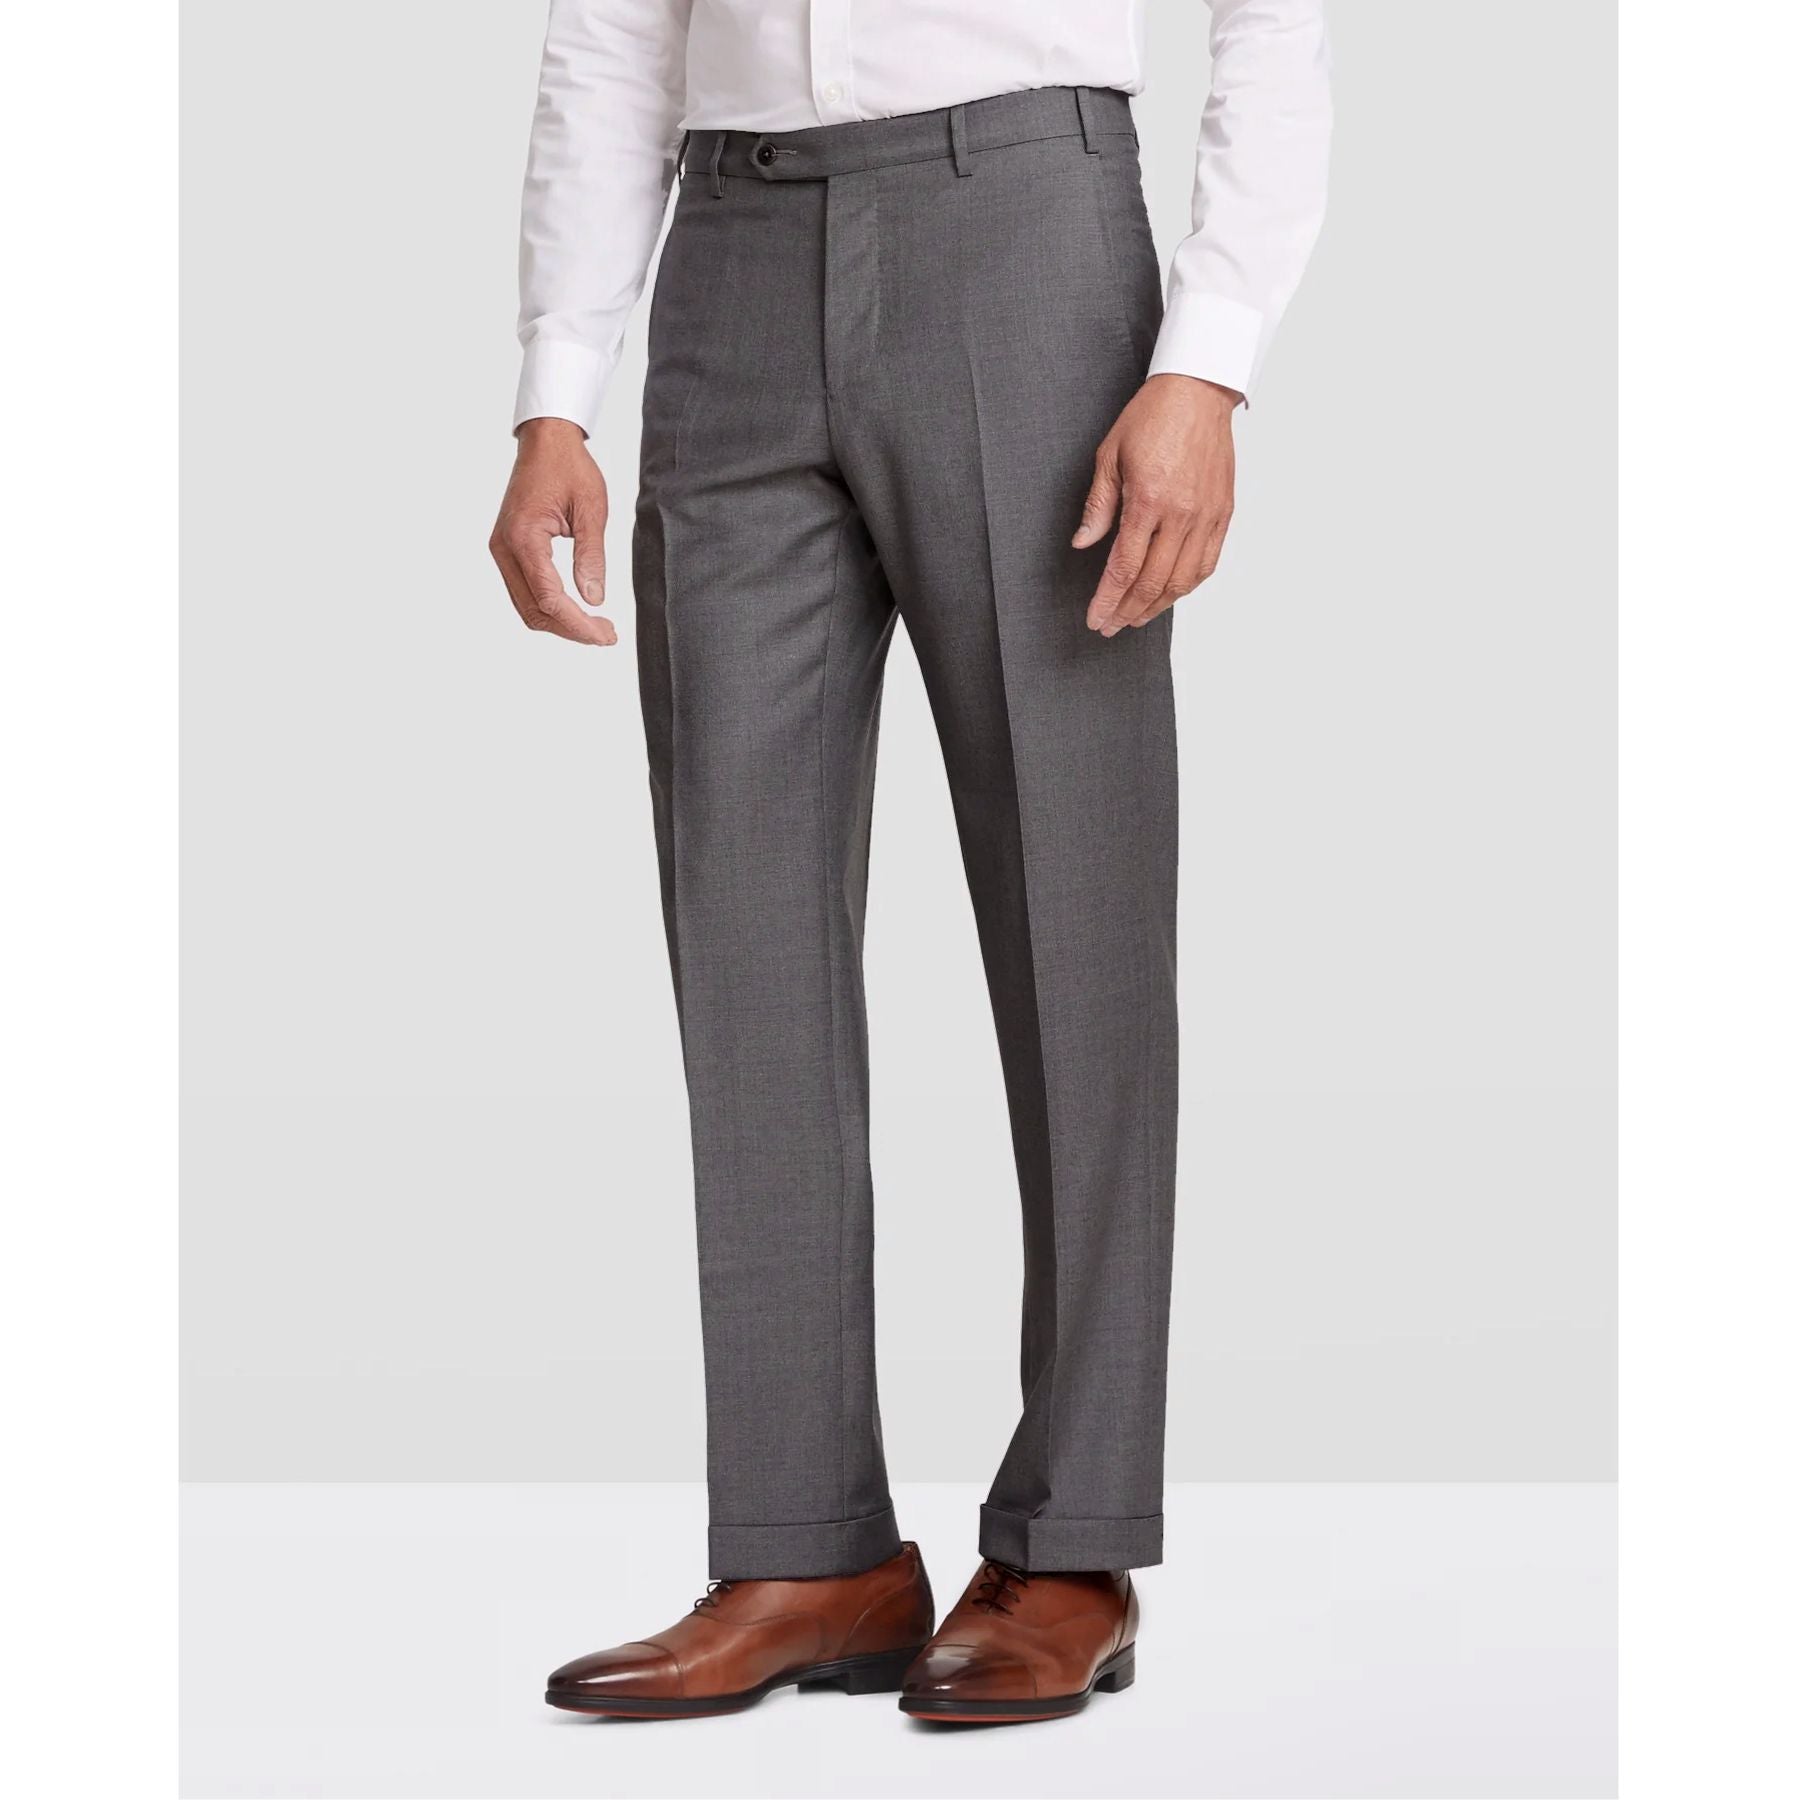 Devon Flat Front Stretch Wool Trouser in Medium Grey, Size 38 (Modern Full Fit) by Zanella